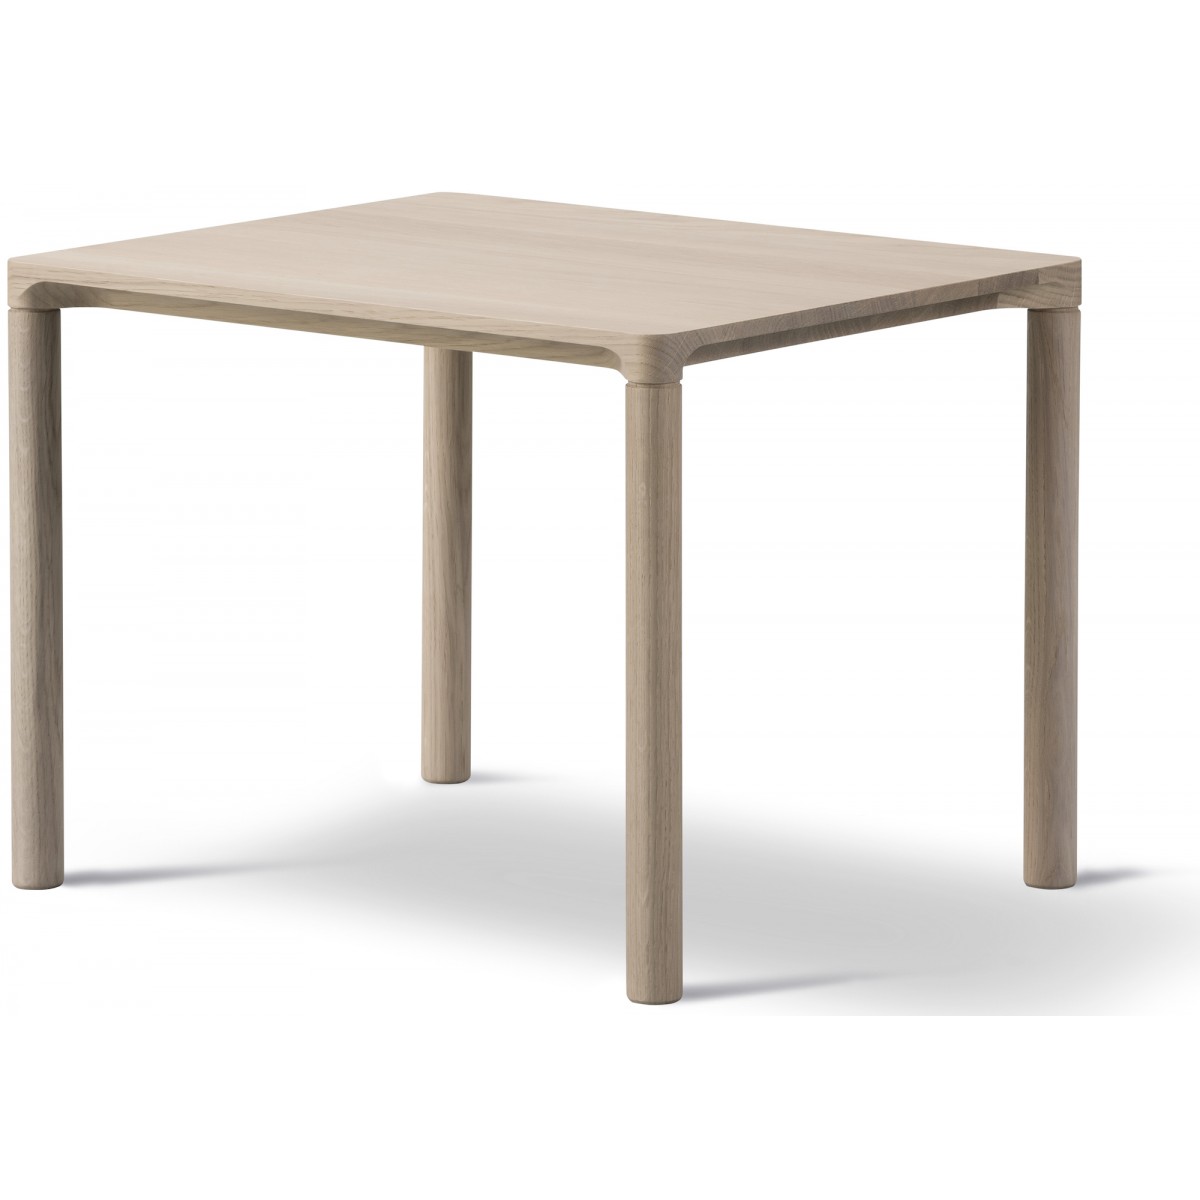 soaped oak – 46.5 x 39 cm – Piloti 6705 coffee table